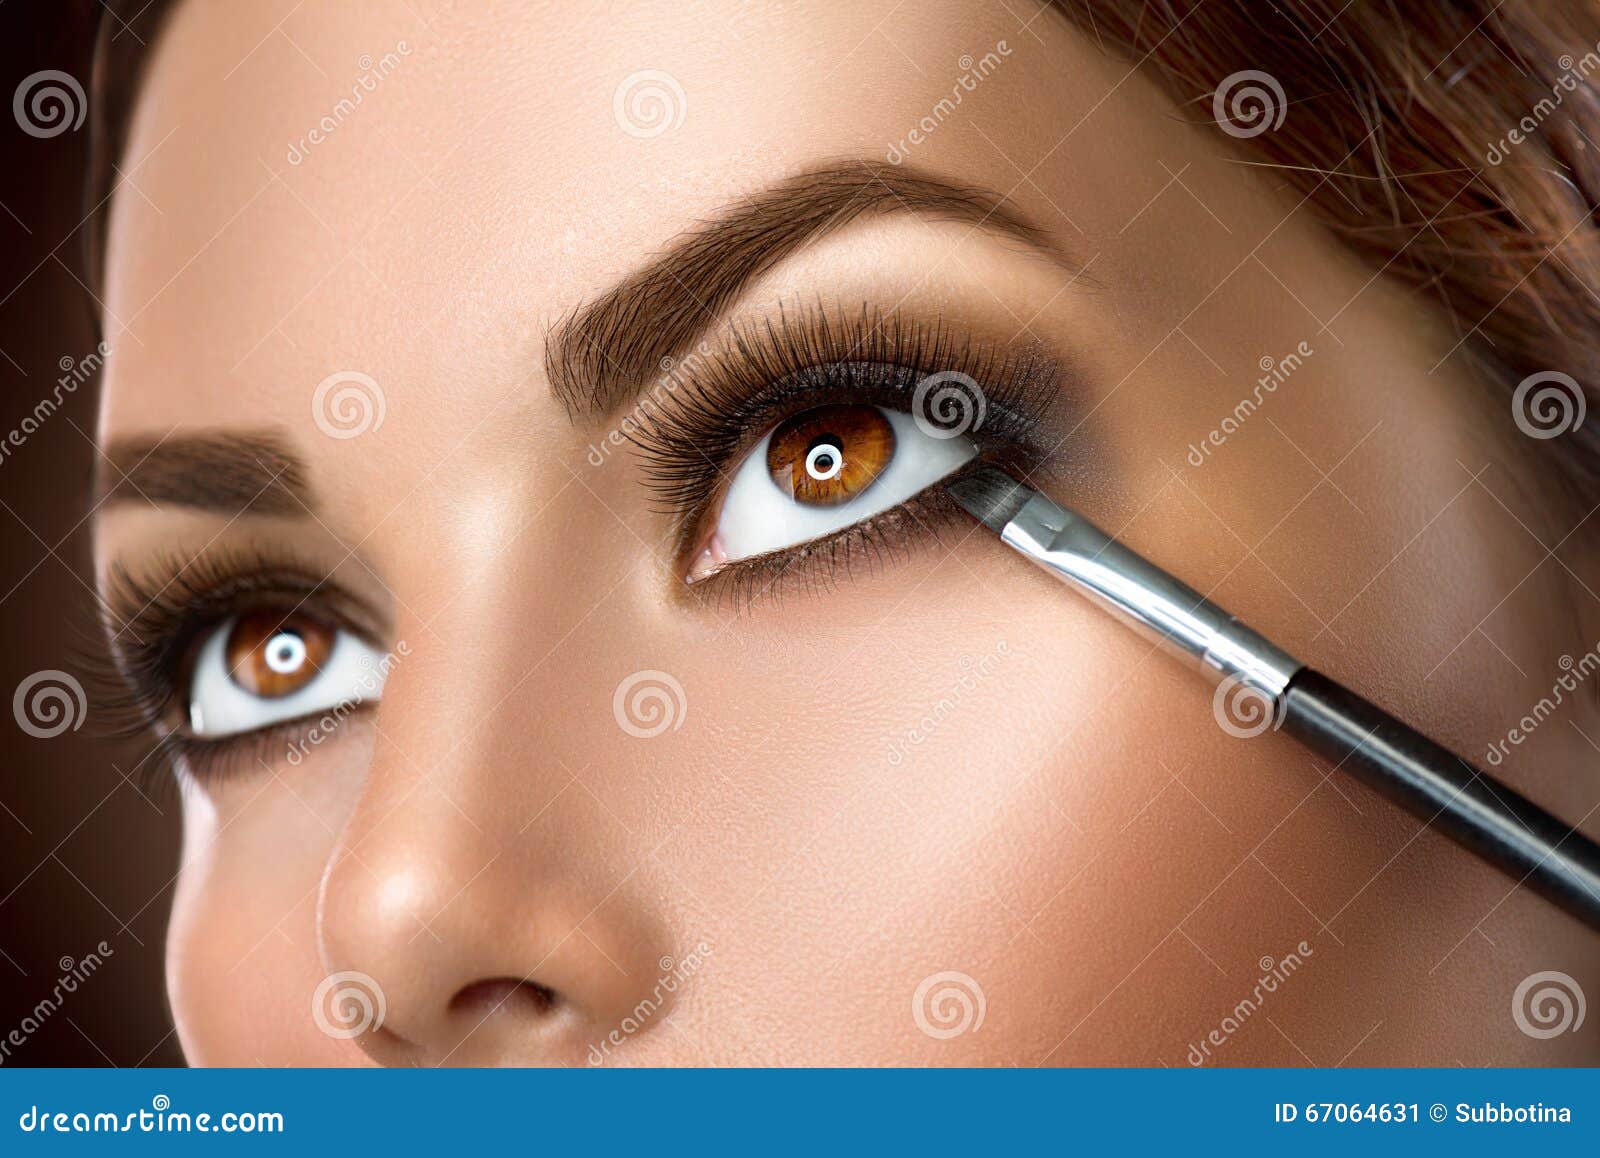 woman applying eye makeup closeup